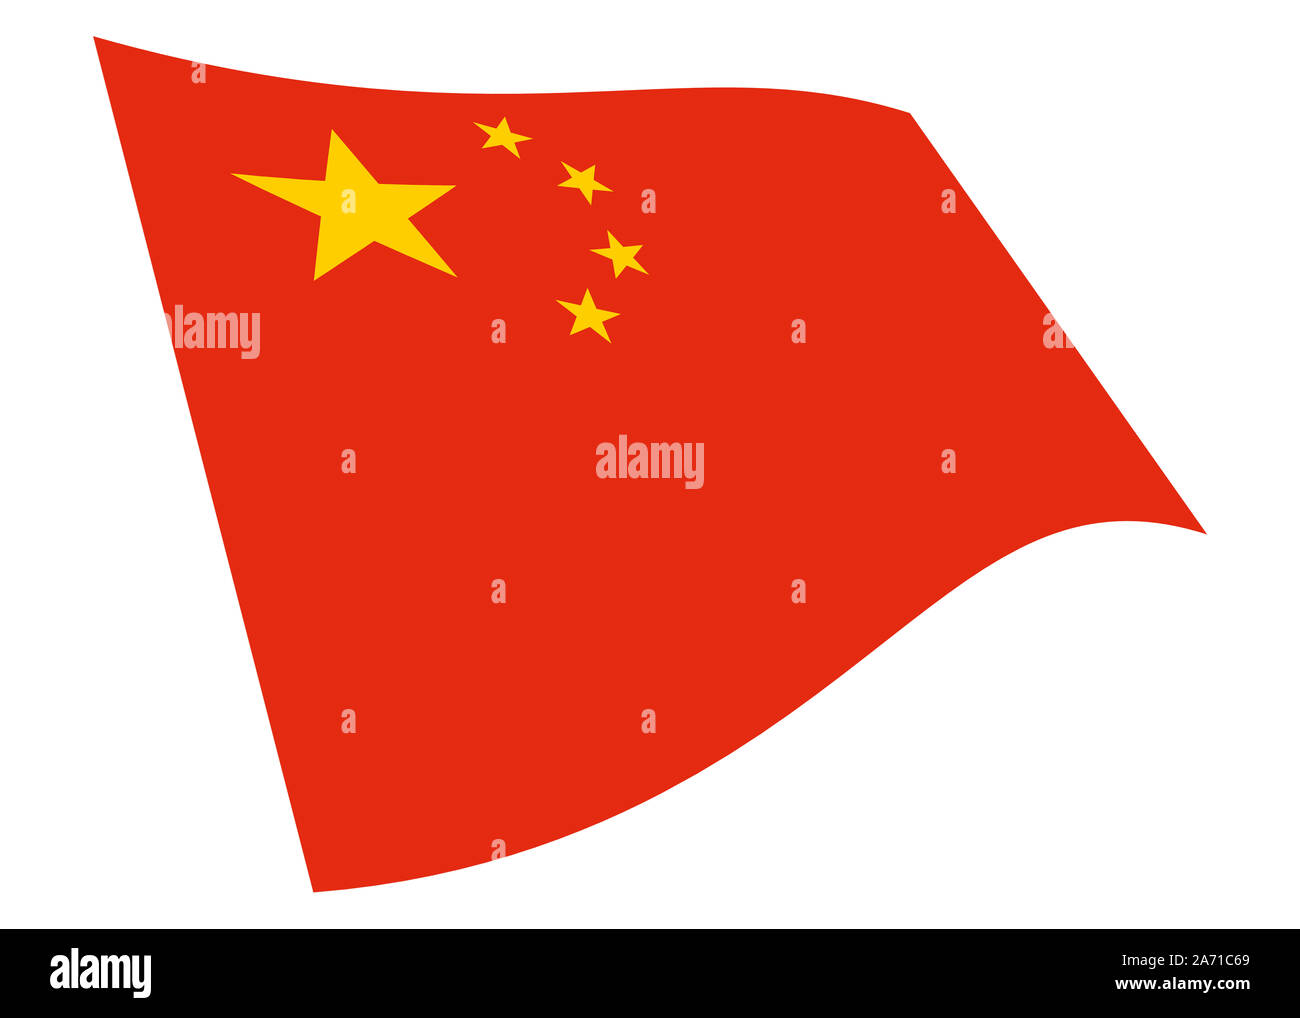 La République populaire de Chine waving flag graphic isolated on white with clipping path Banque D'Images